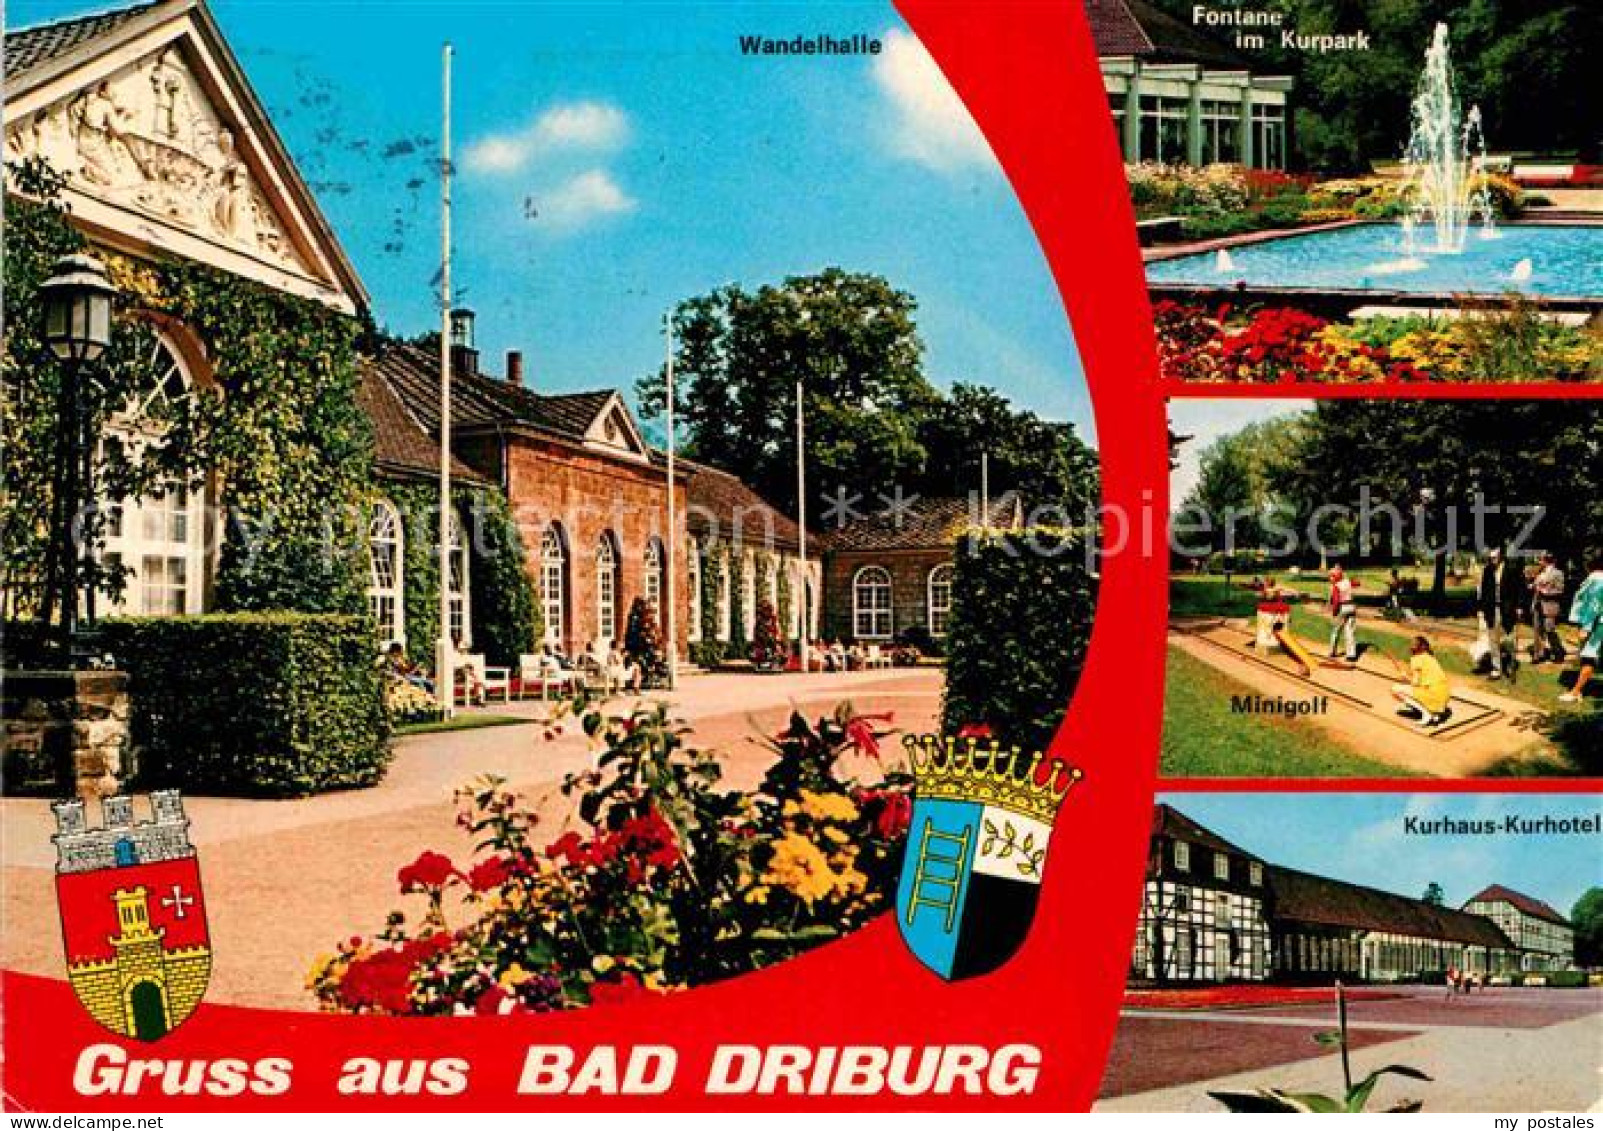 72846403 Bad Driburg Wandelhalle Kurhaus Kurhotel Fontaene Minigolf Alhausen - Bad Driburg